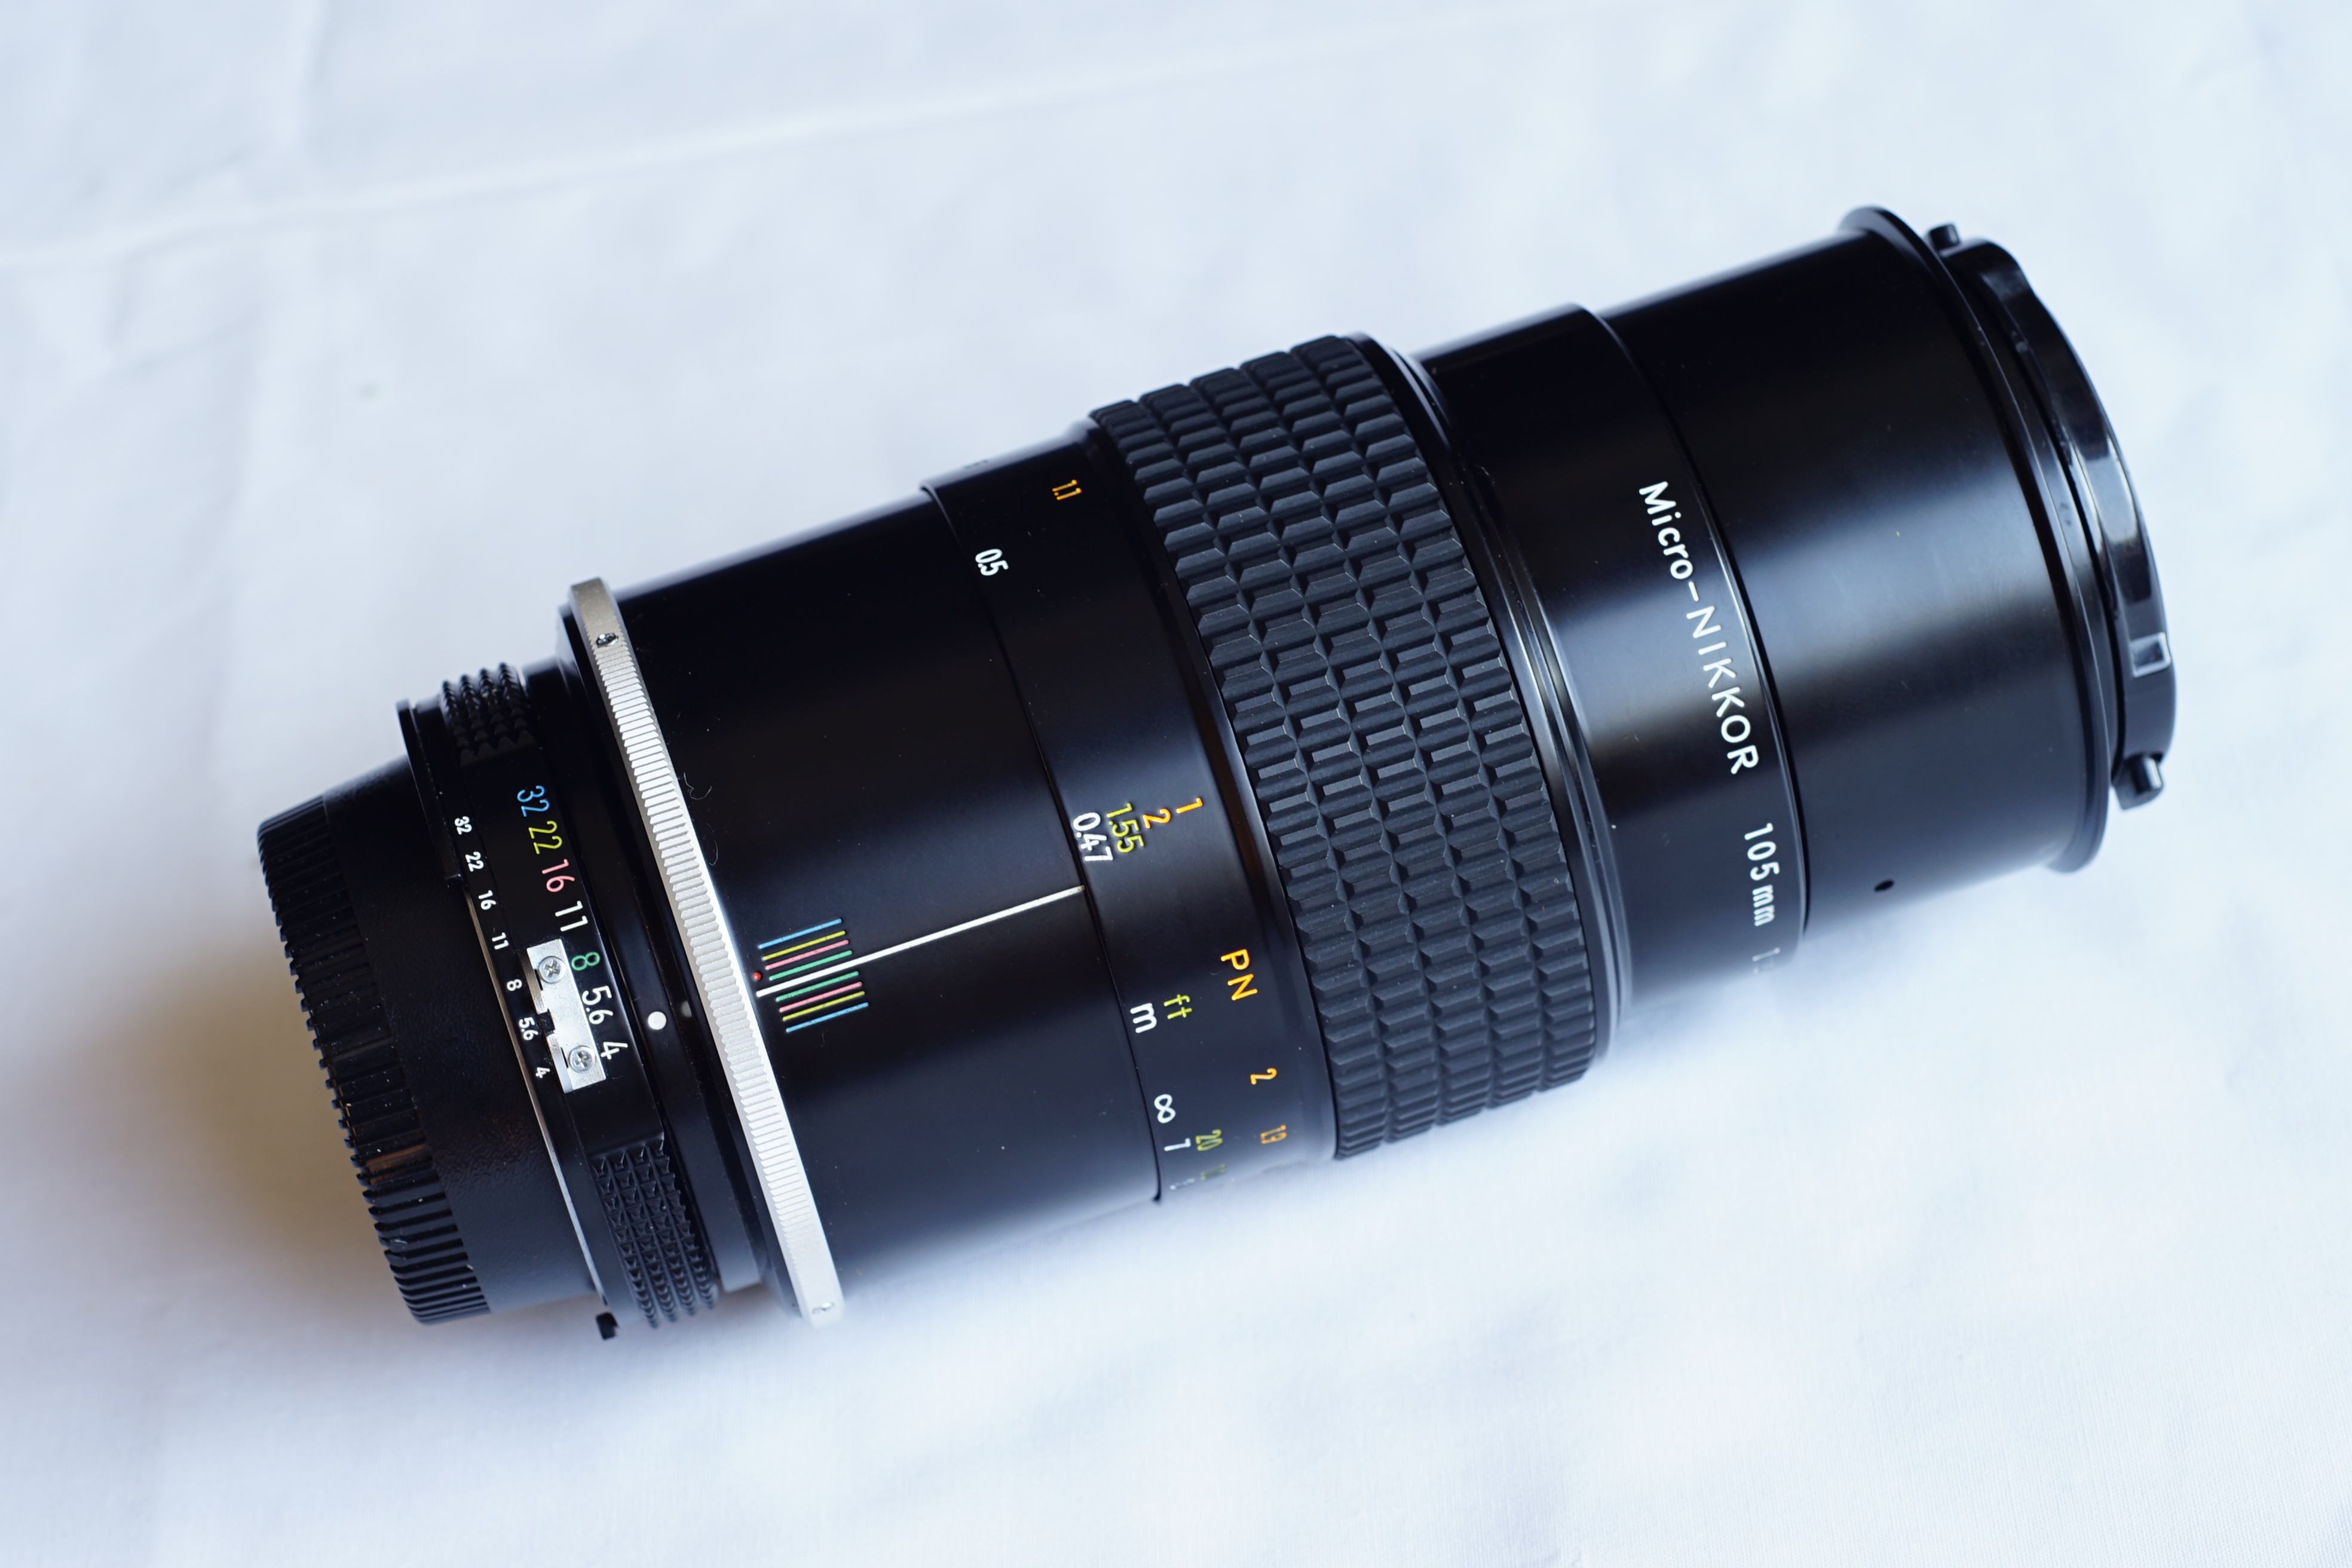  Nikon AI 105mm professional macro manual lens